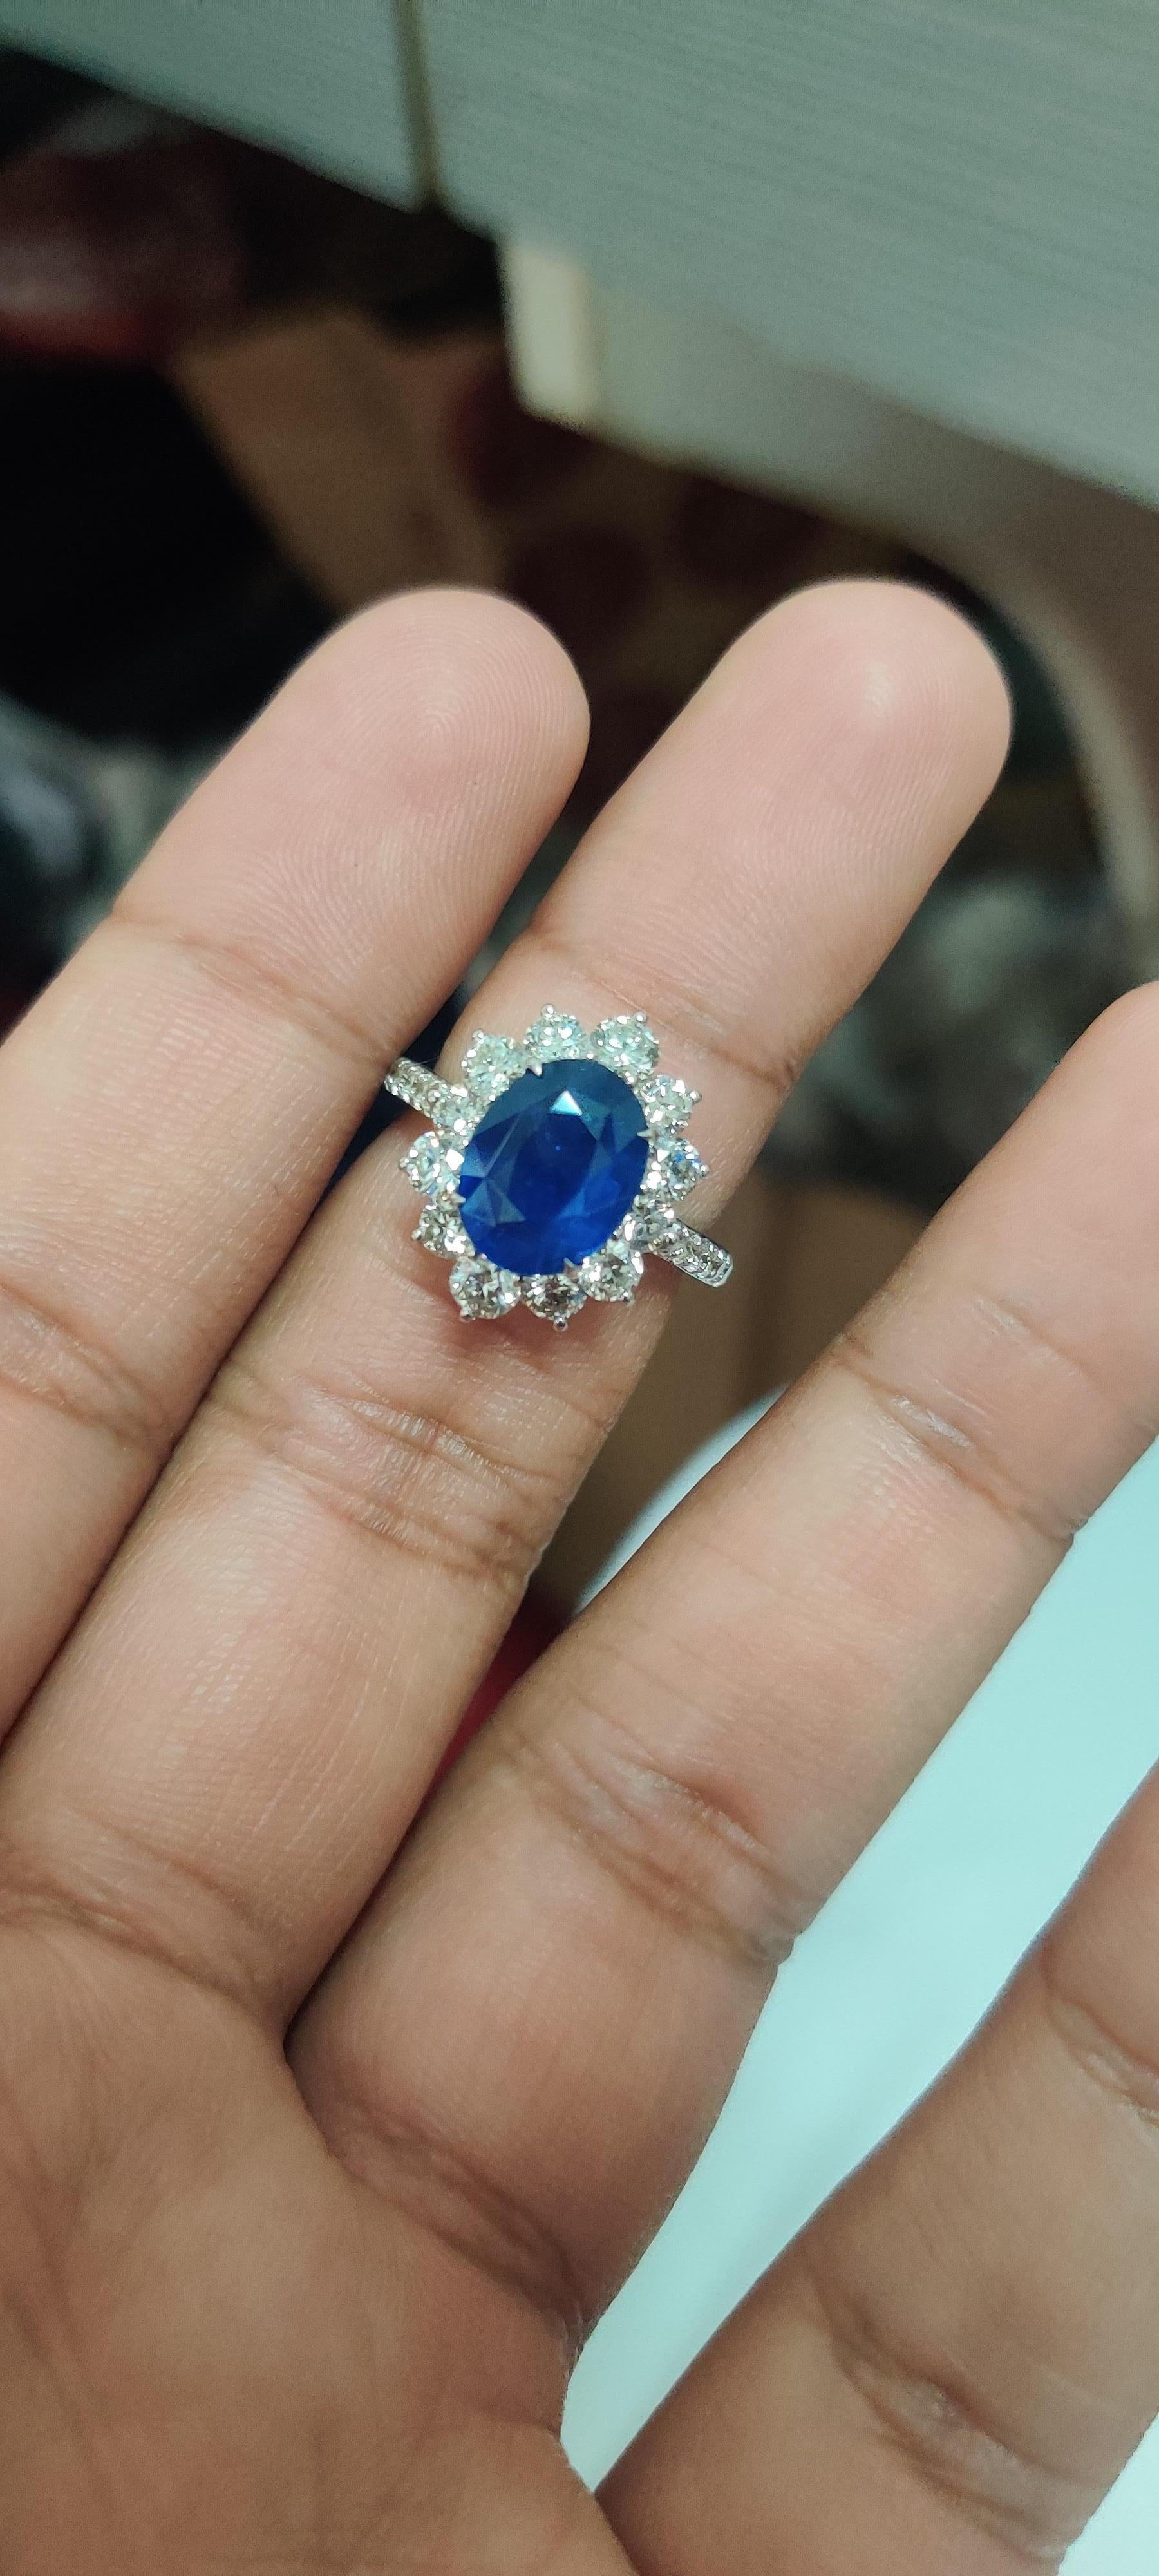 Women's 4.19 Carat Sapphire Diamond Cocktail Ring